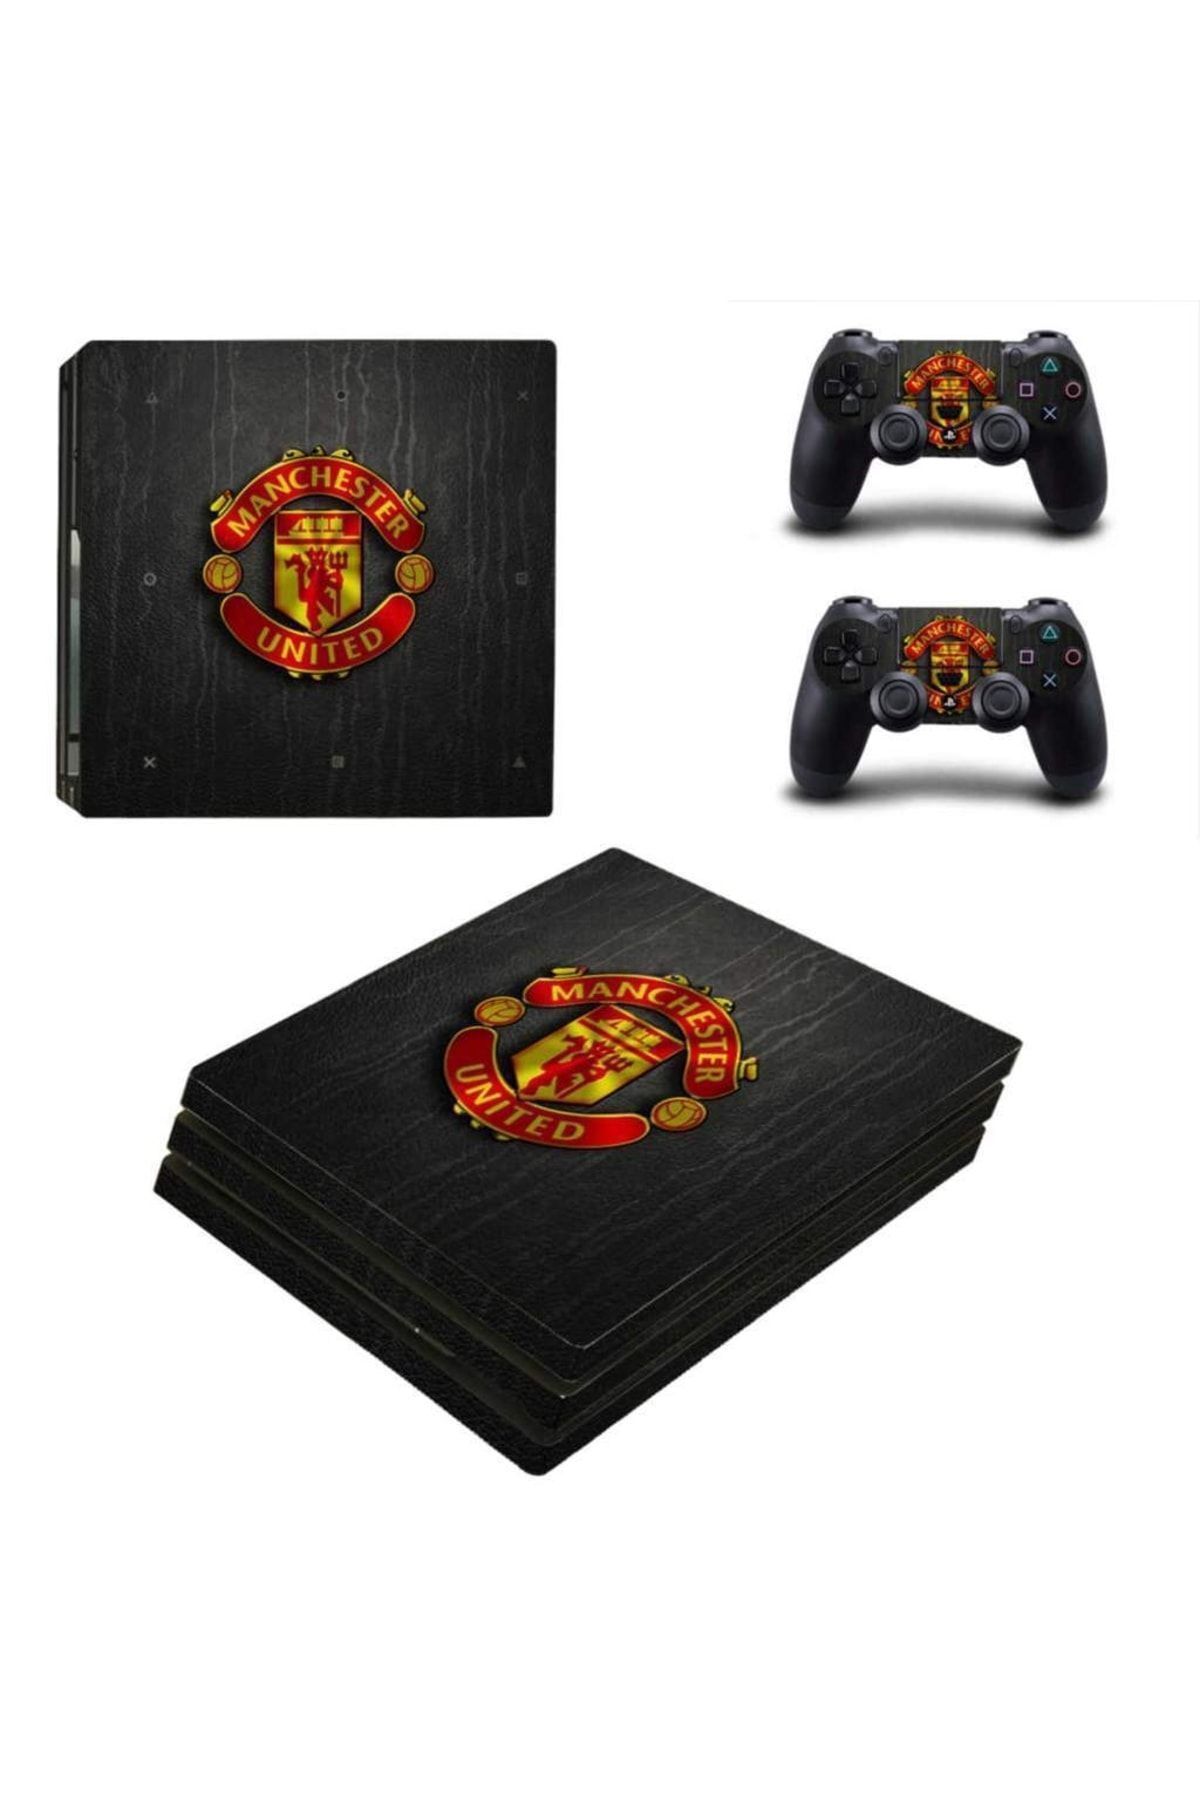 Kt Grup Manchester United Playstation 4 Pro Uyumlu Full Sticker Kaplama